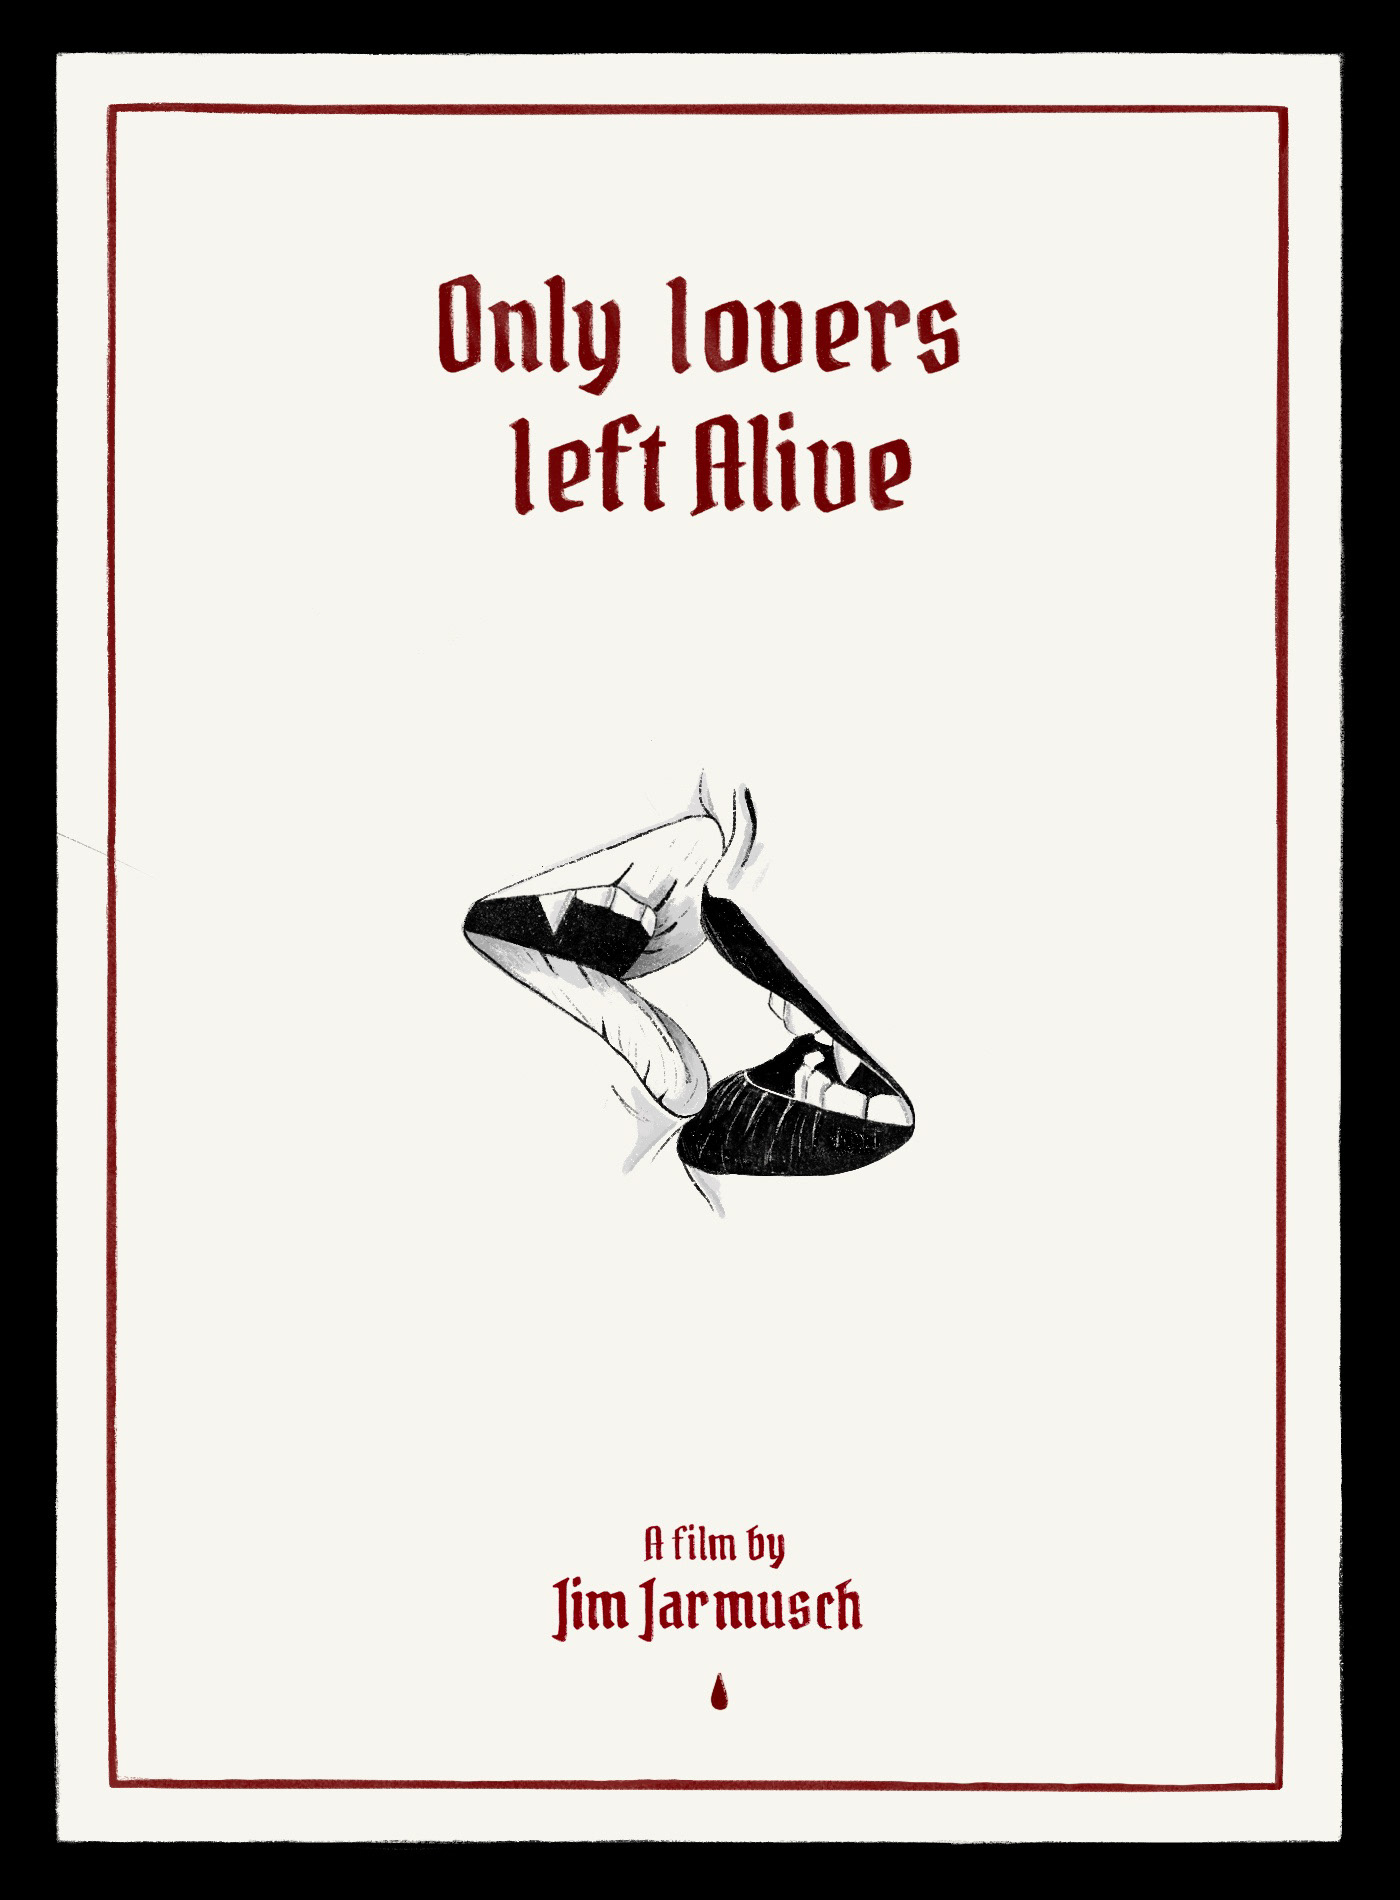 Digital Art  digital illustration ILLUSTRATION  jim jaramush kiss Lovers movie movie poster poster Procreate